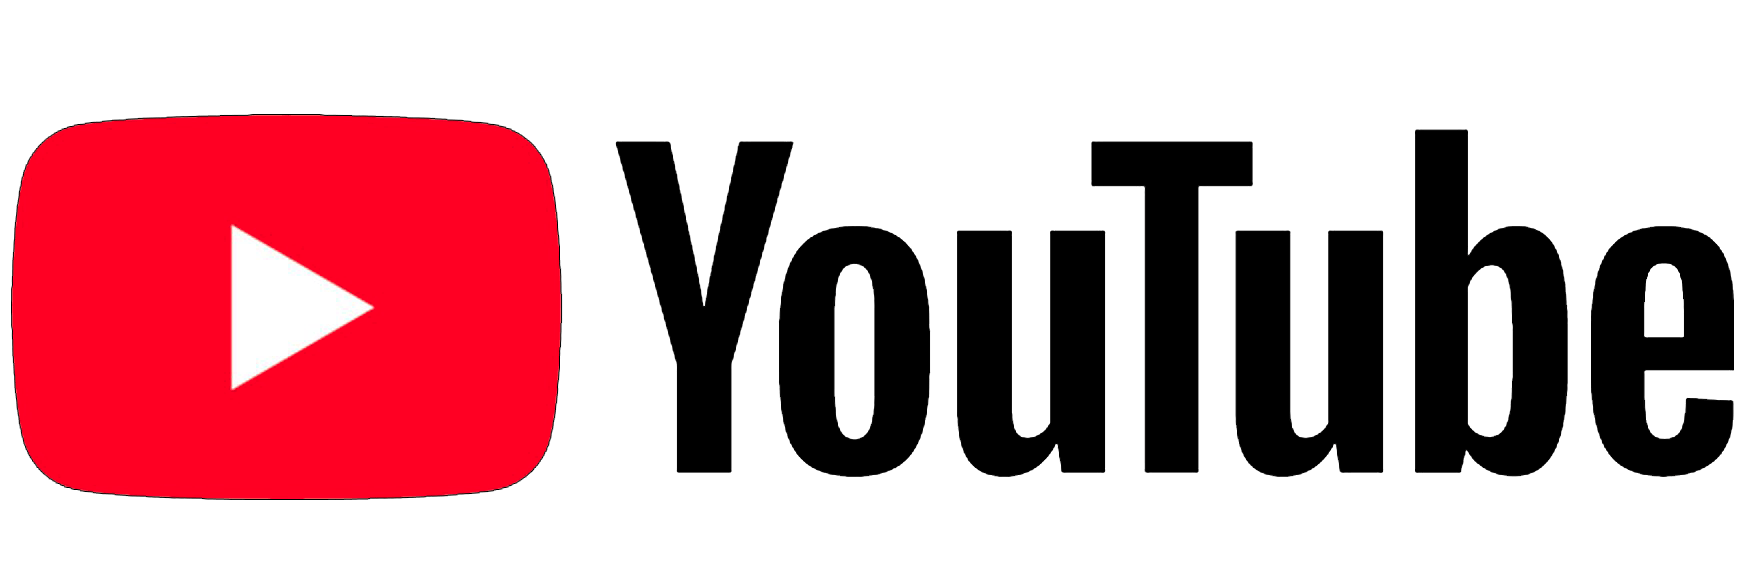 MountZionBelton YouTube Videos